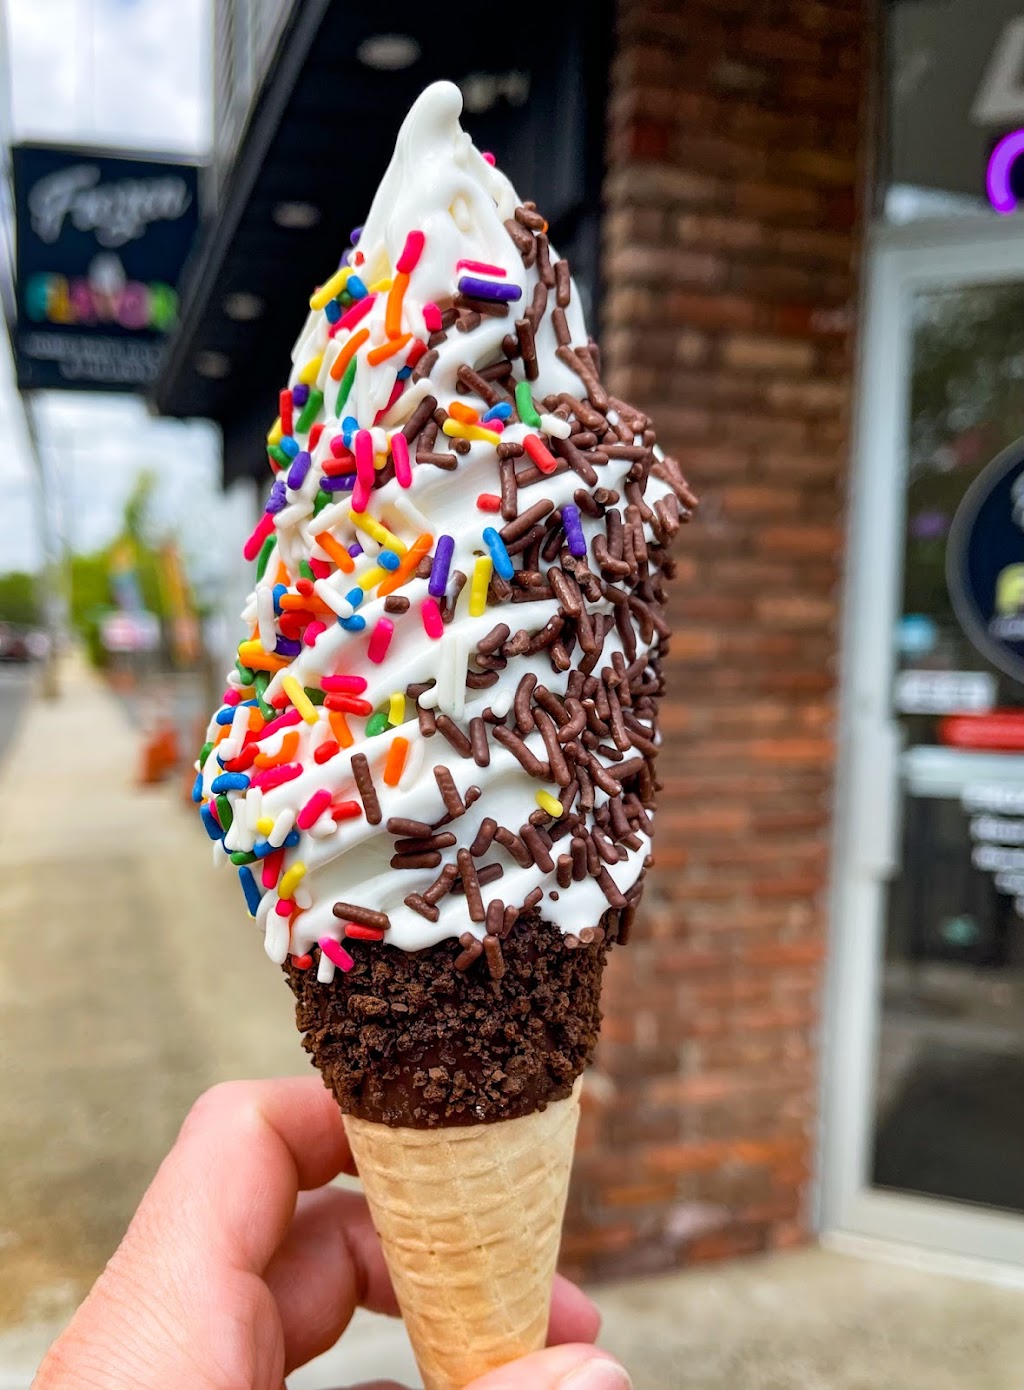 Frozen Flavors Homemade Ice Cream & Italian Ice | 518 Front St, Union Beach, NJ 07735 | Phone: (732) 391-7045